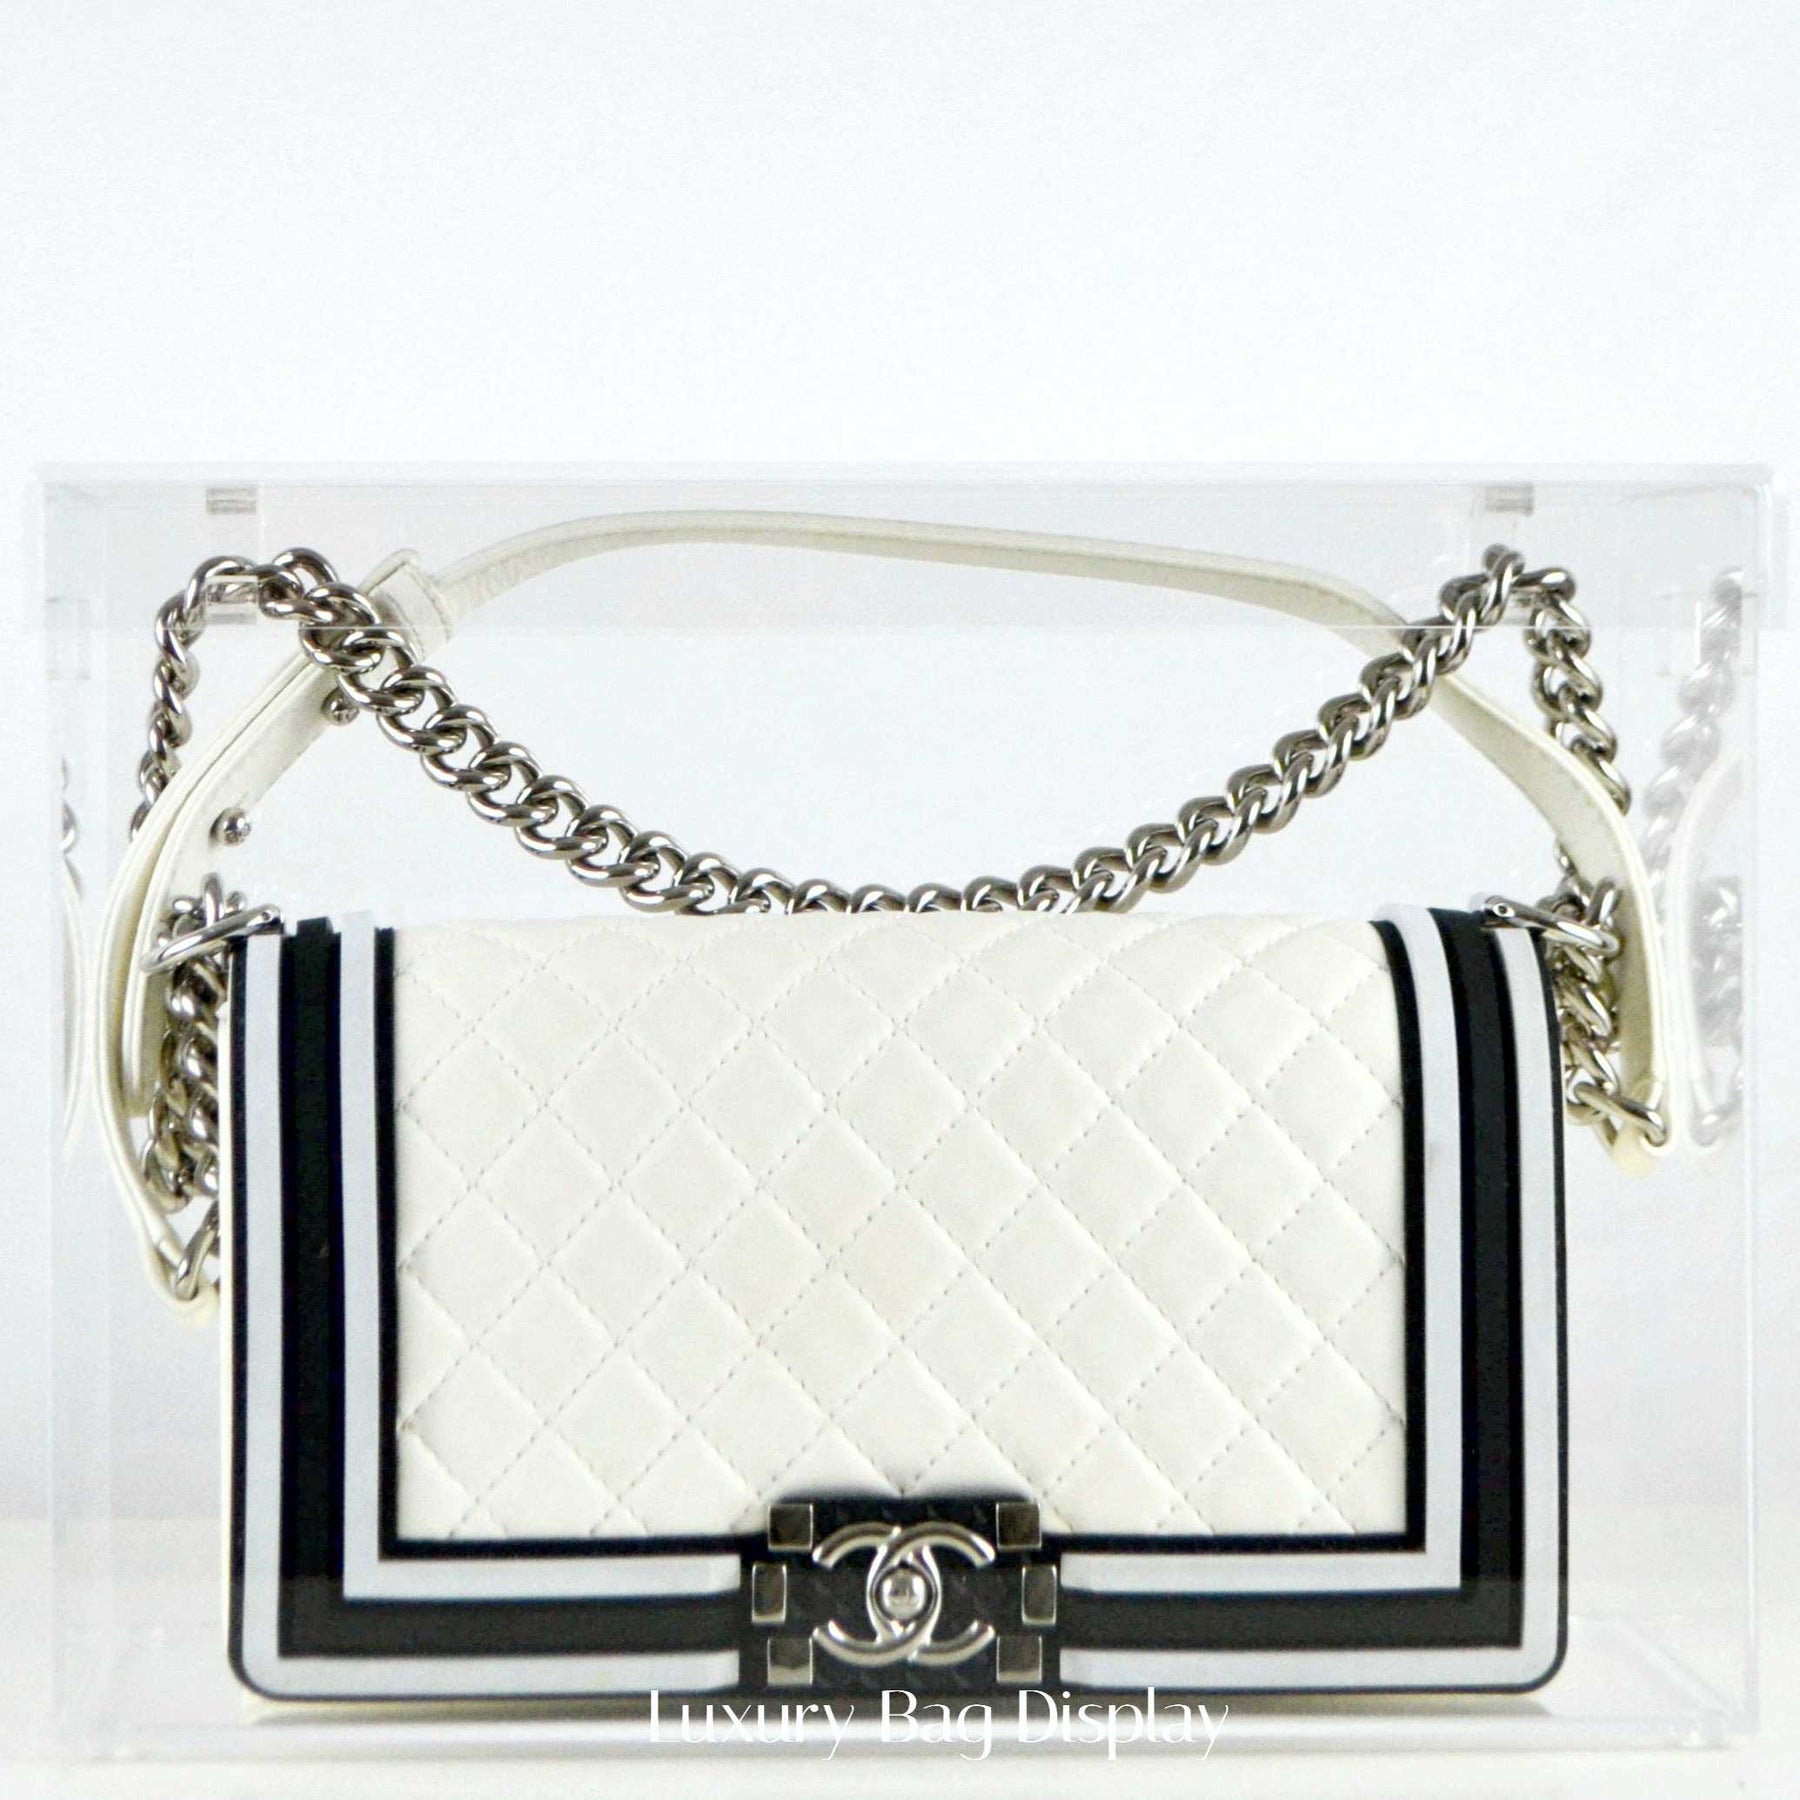 Handbag Storage Cases for Hermes Birkin, Hermes Kelly and Chanel Flap – Luxury  Bag Display